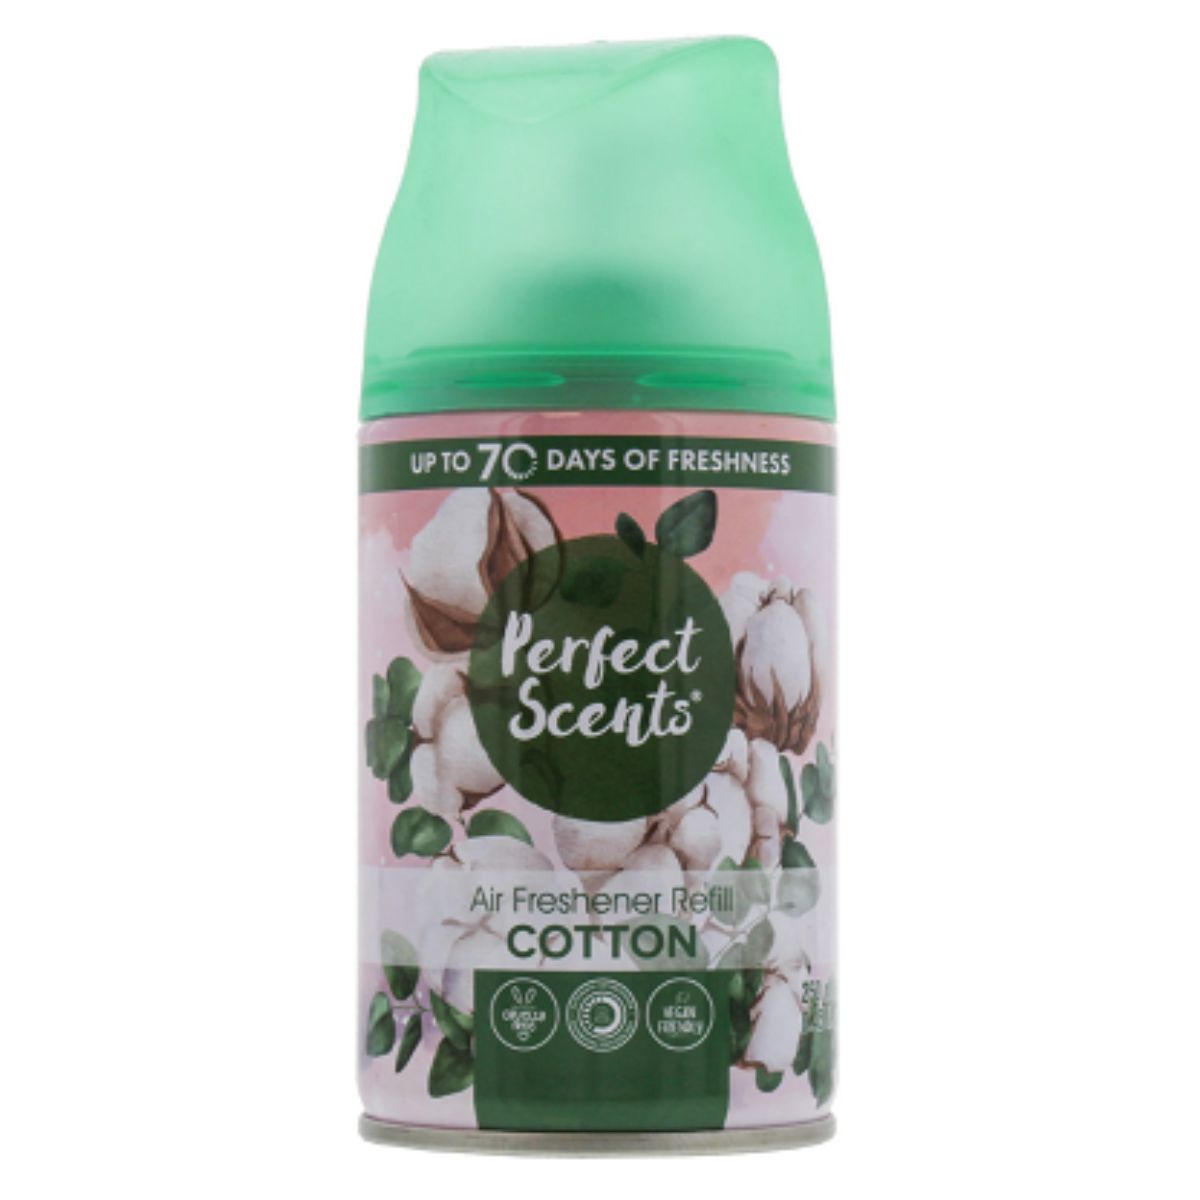 Perfect Scents cotton deodorant.